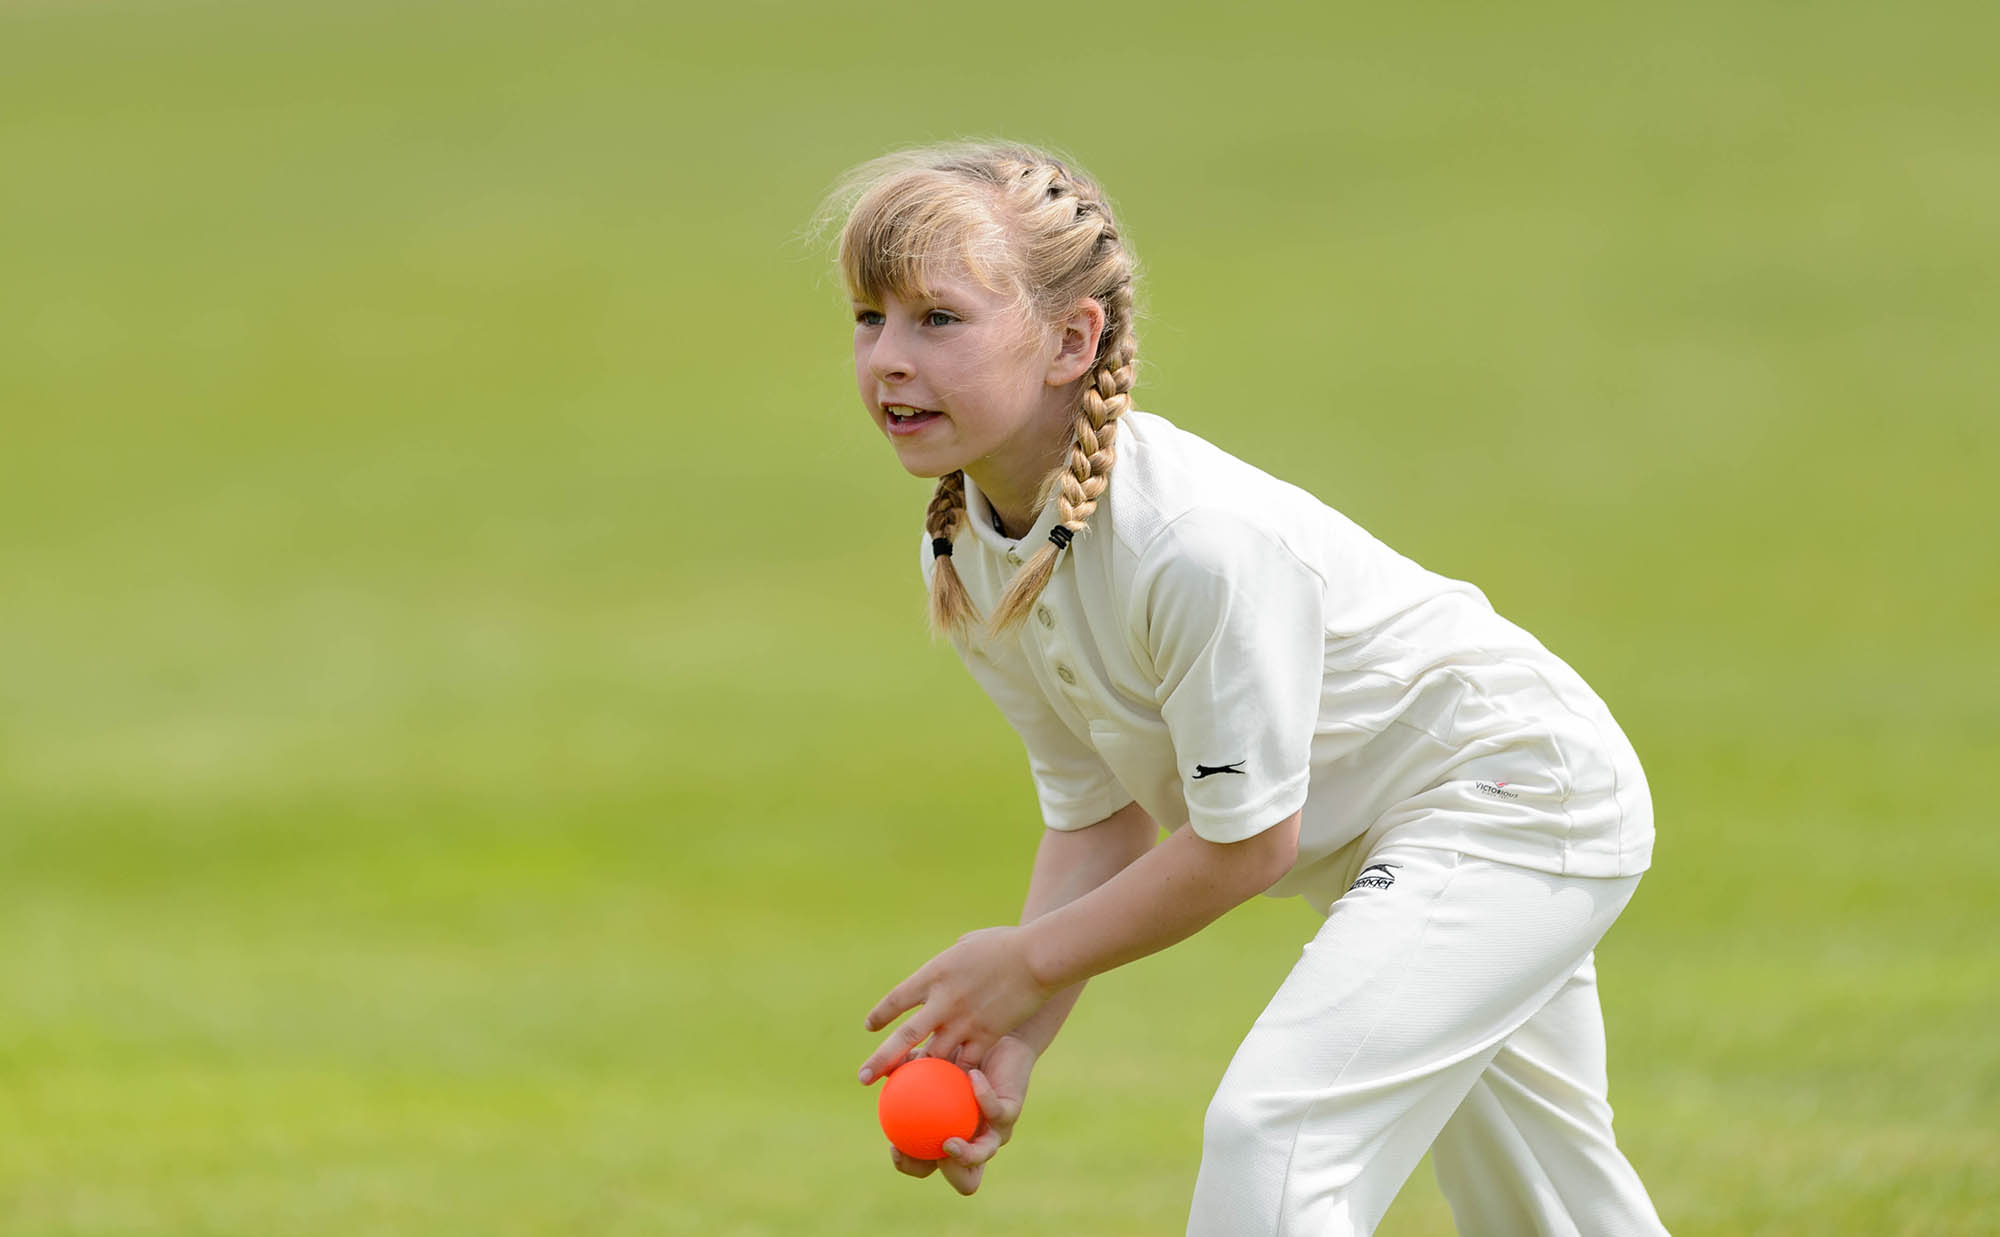 young girl throwing cricket ball